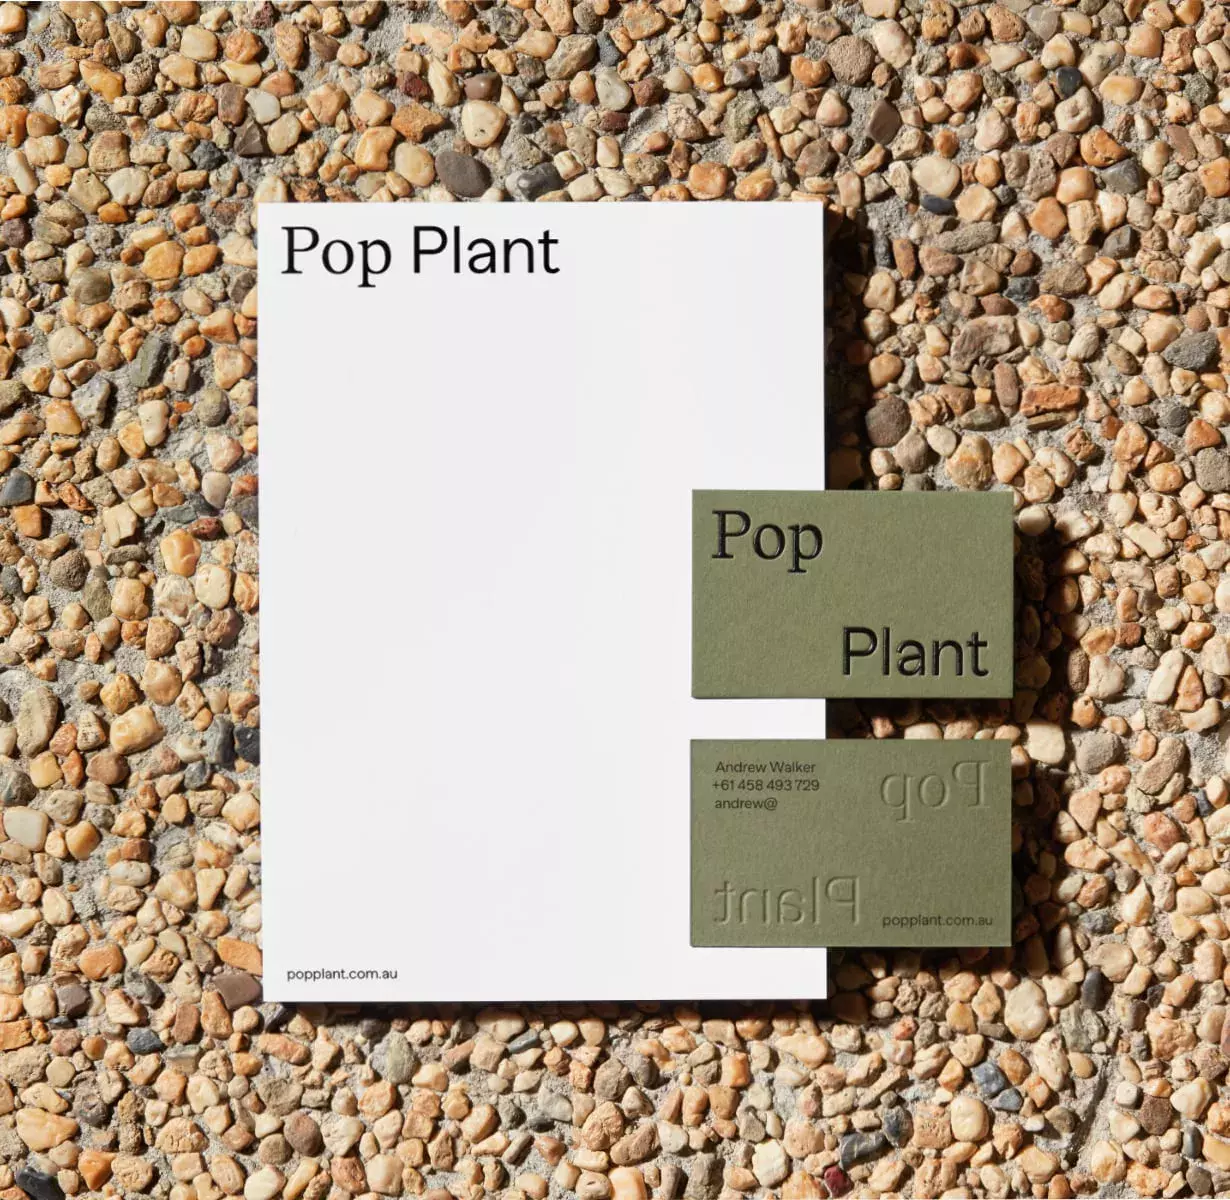 Pop Plant Branding and Visual Identity